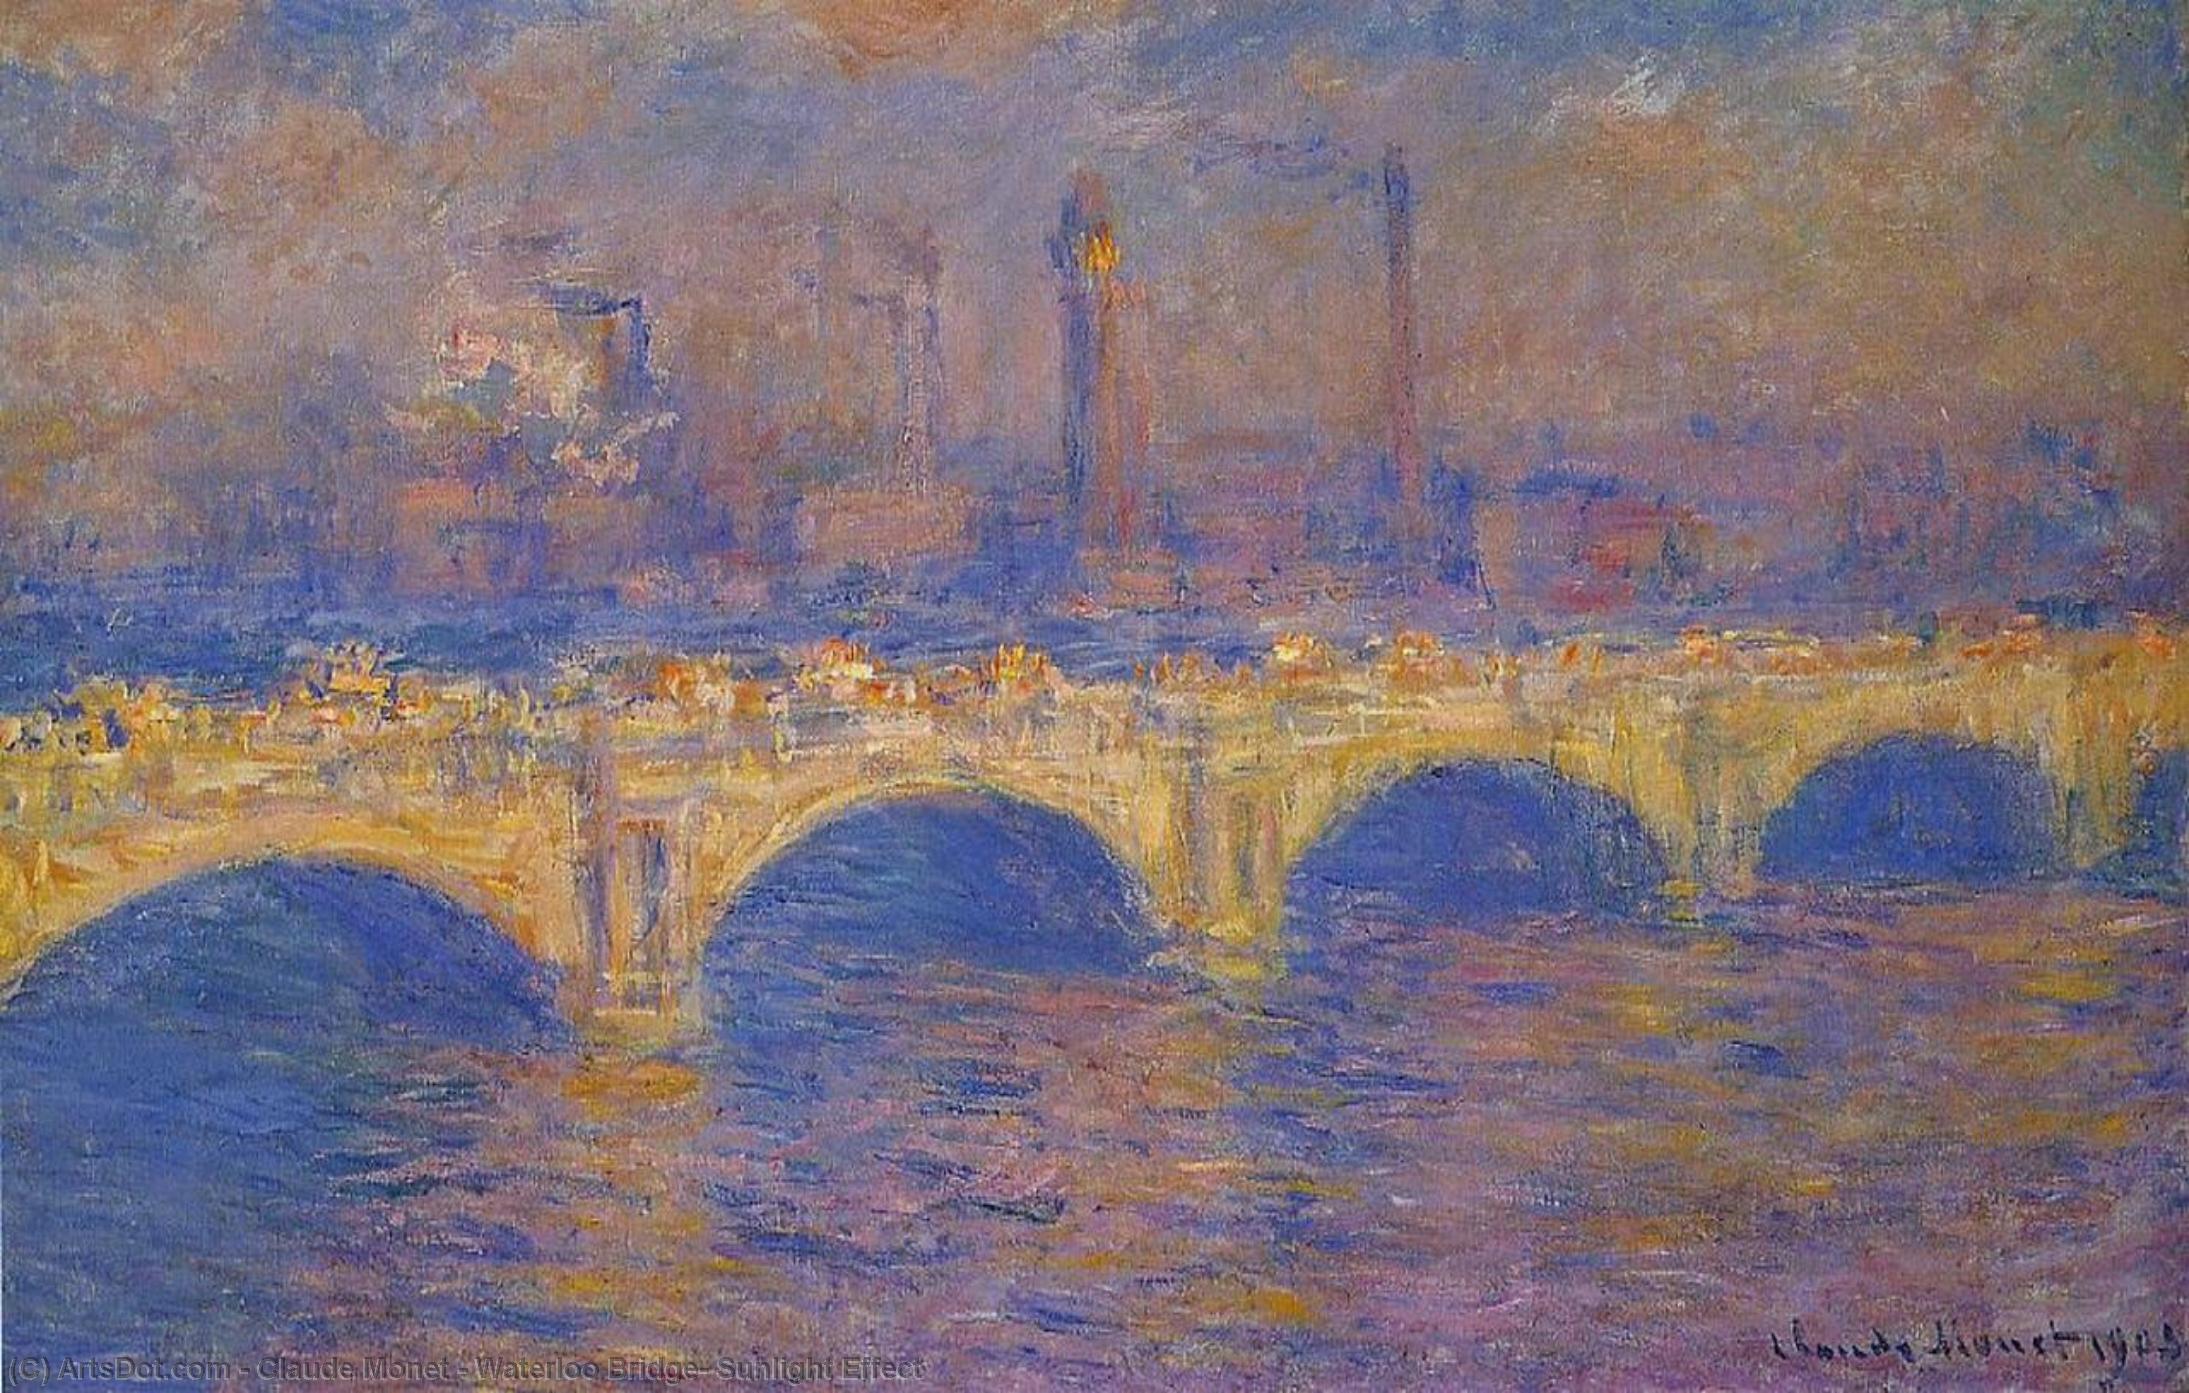 Wikioo.org - The Encyclopedia of Fine Arts - Painting, Artwork by Claude Monet - Waterloo Bridge, Sunlight Effect